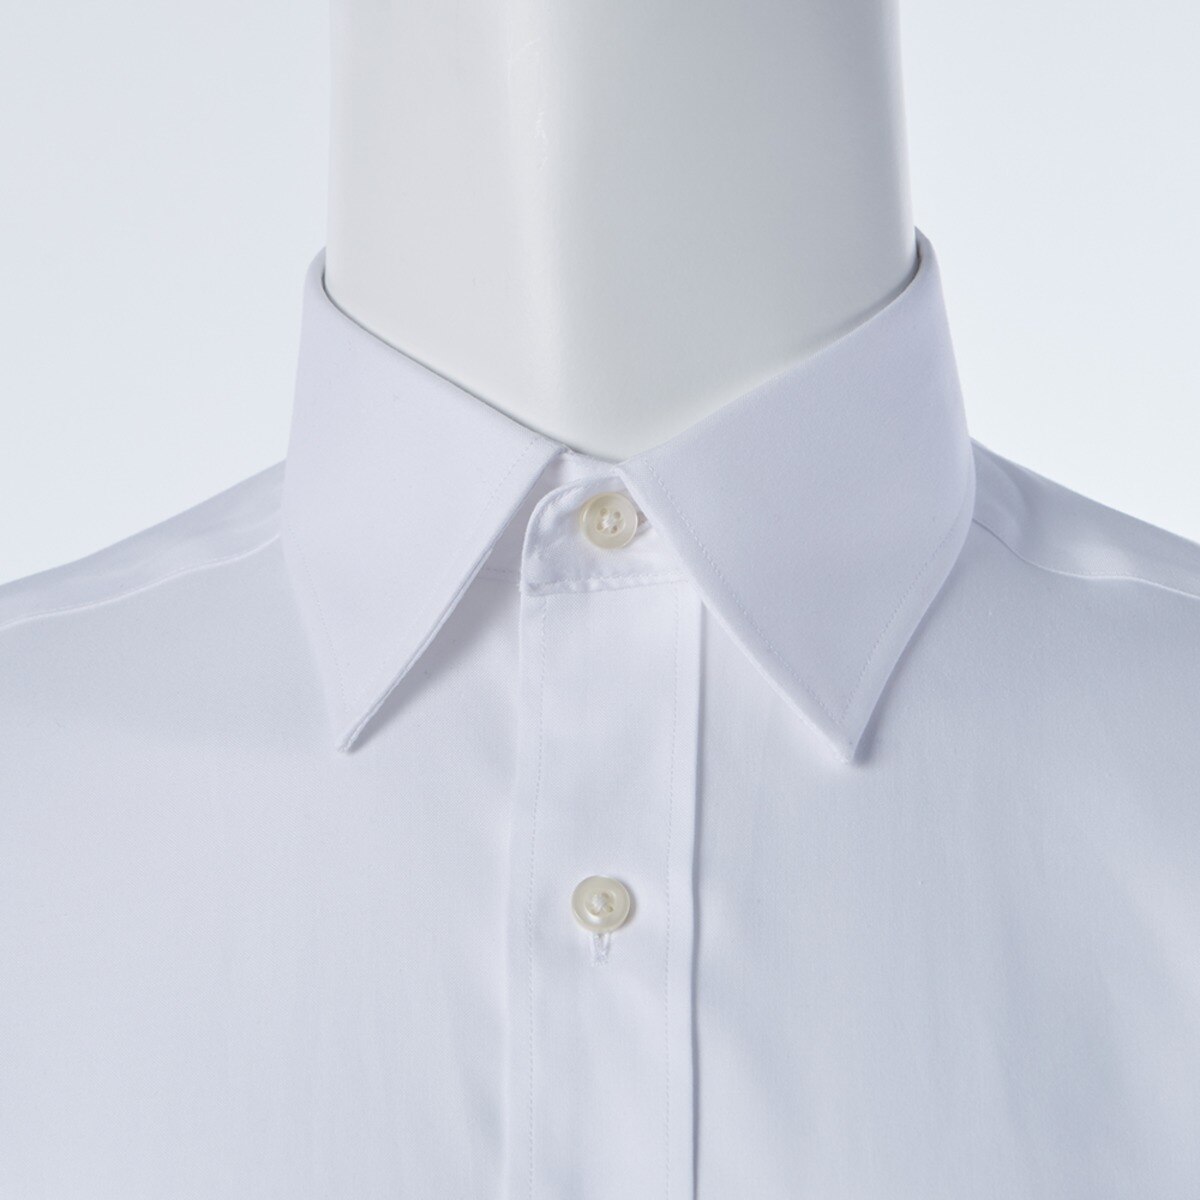 Kirkland Signature 科克蘭 男長袖標準領免燙襯衫 白色 領圍16.5吋 X 袖長 34/35吋